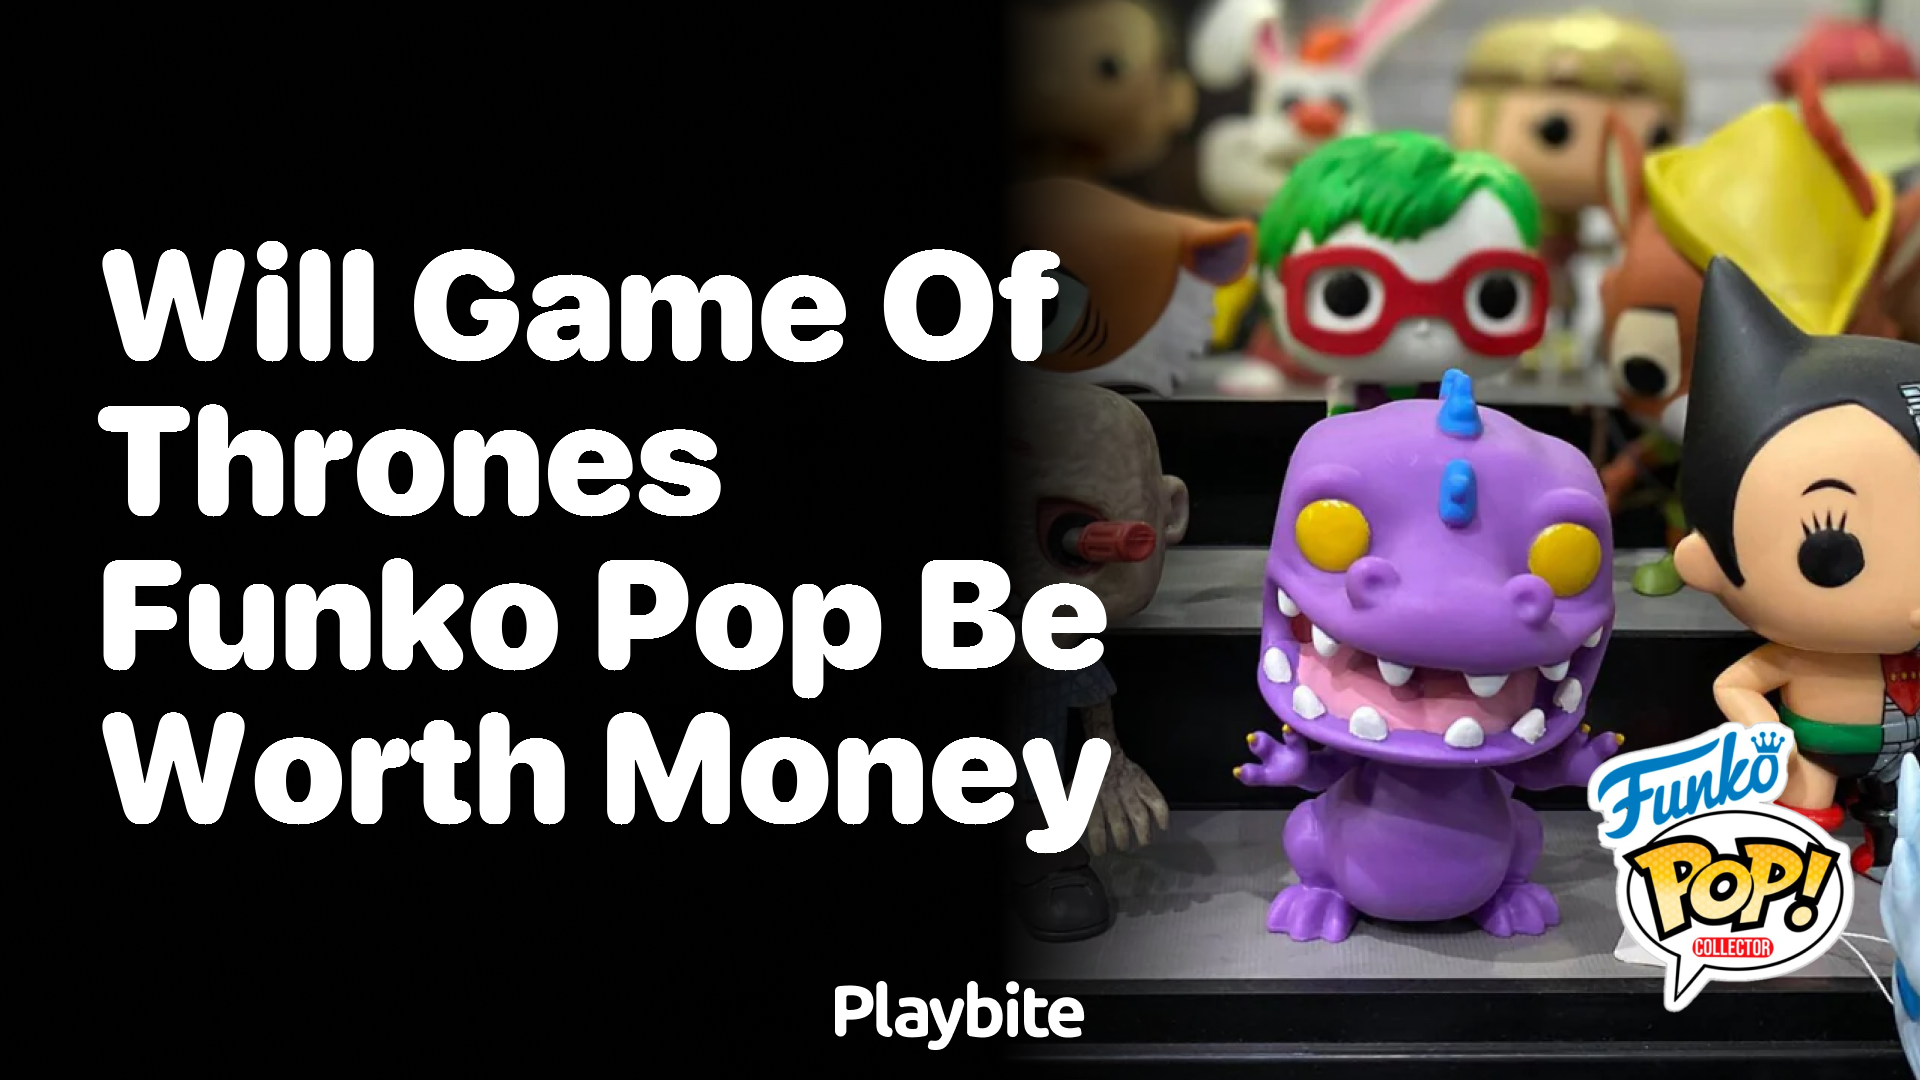 Will Game of Thrones Funko Pop be worth money?